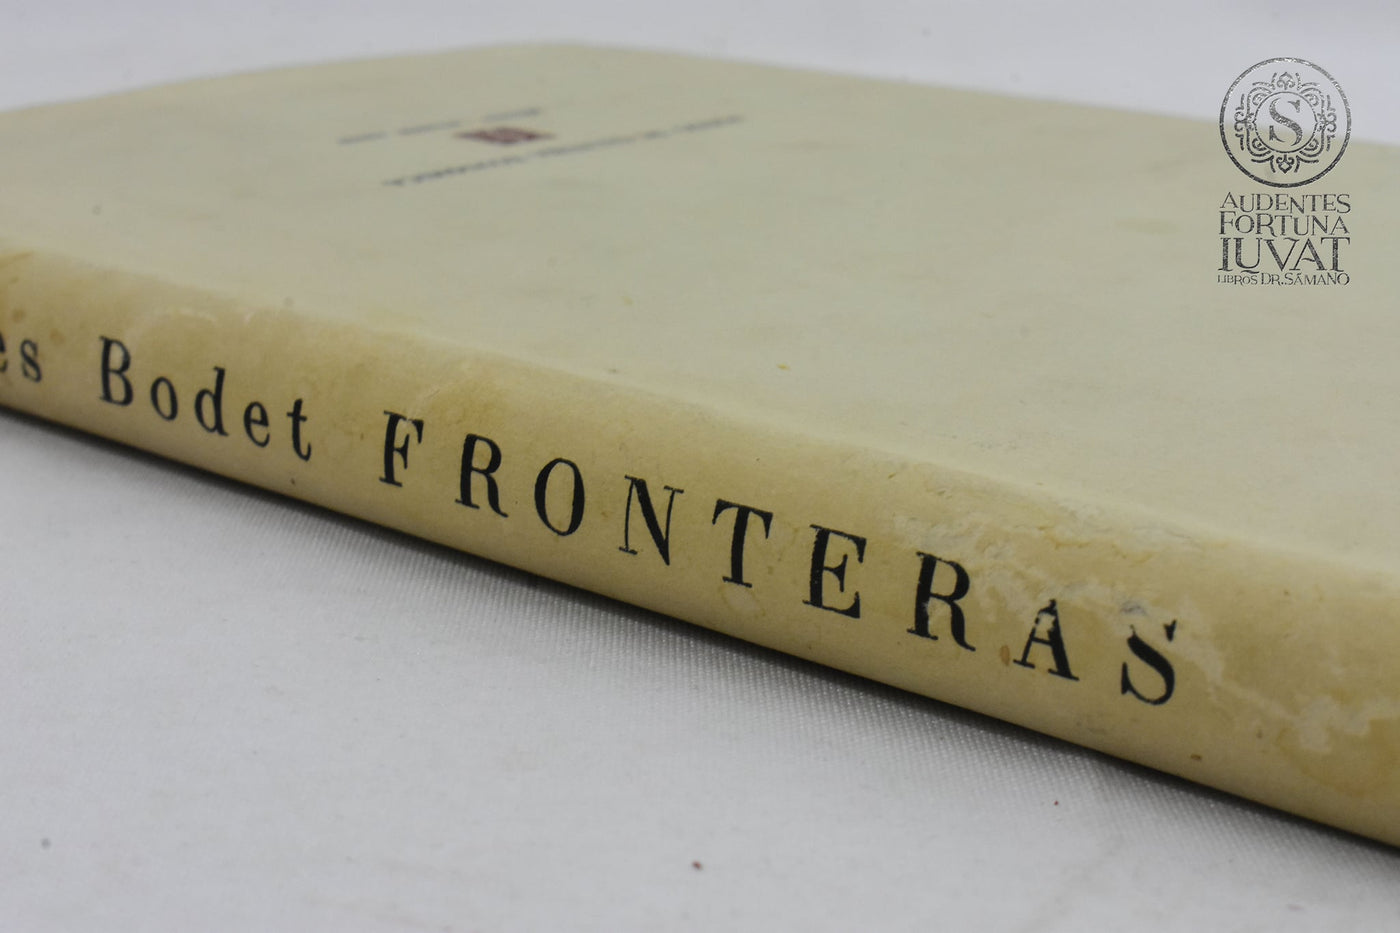 "Fronteras" - JAIME TORRES BODET